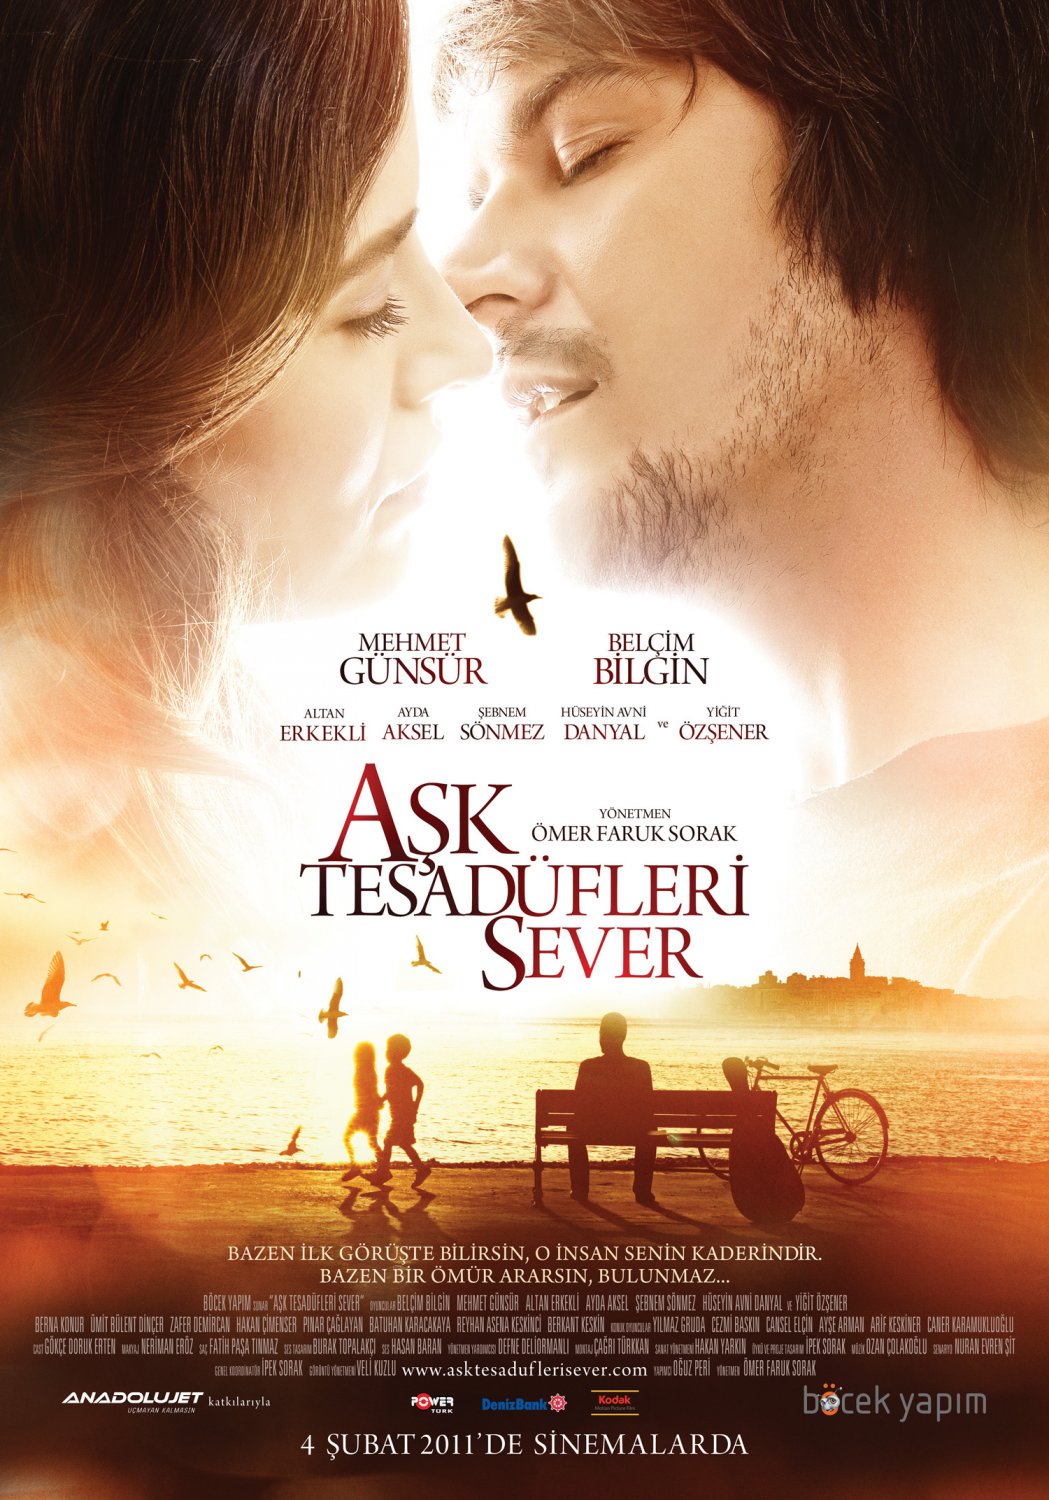 Extra Large Movie Poster Image for Ask Tesadüfleri Sever (#2 of 4)